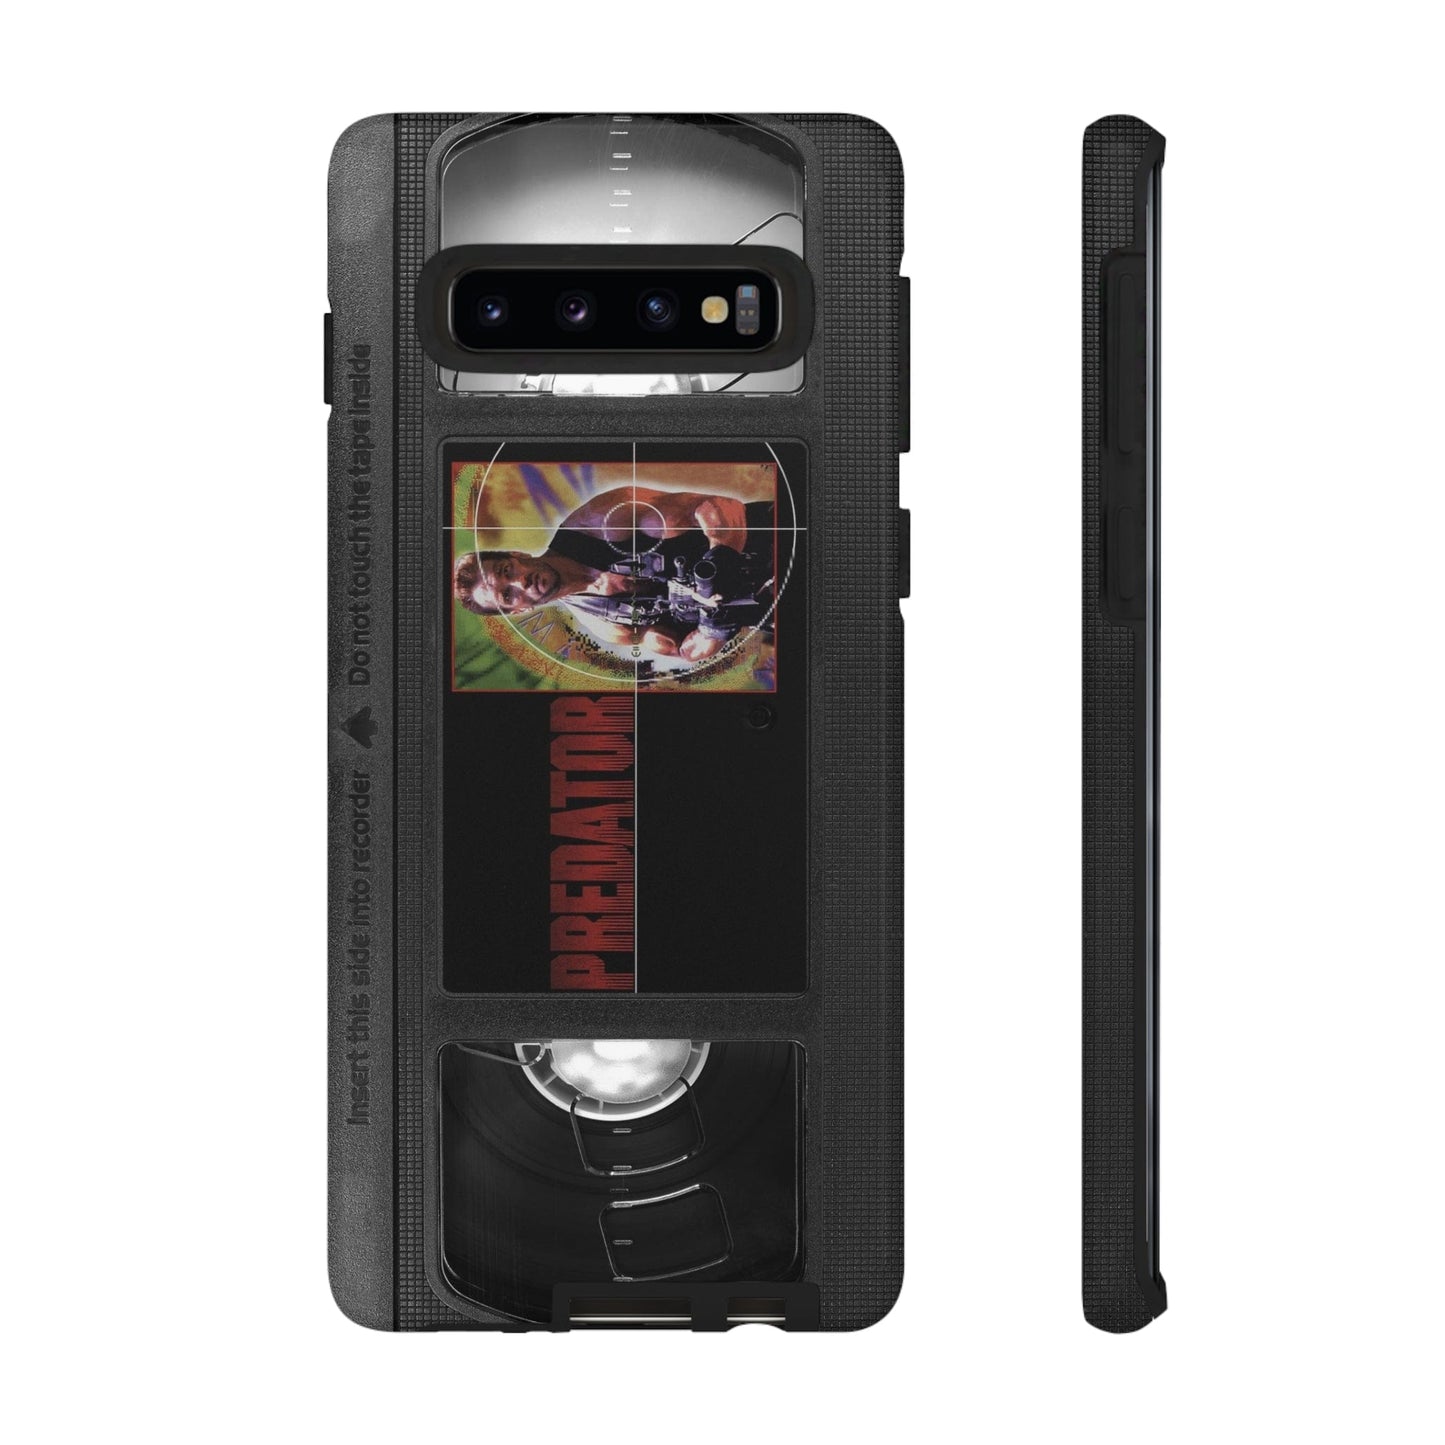 Predator Impact Resistant VHS Phone Case